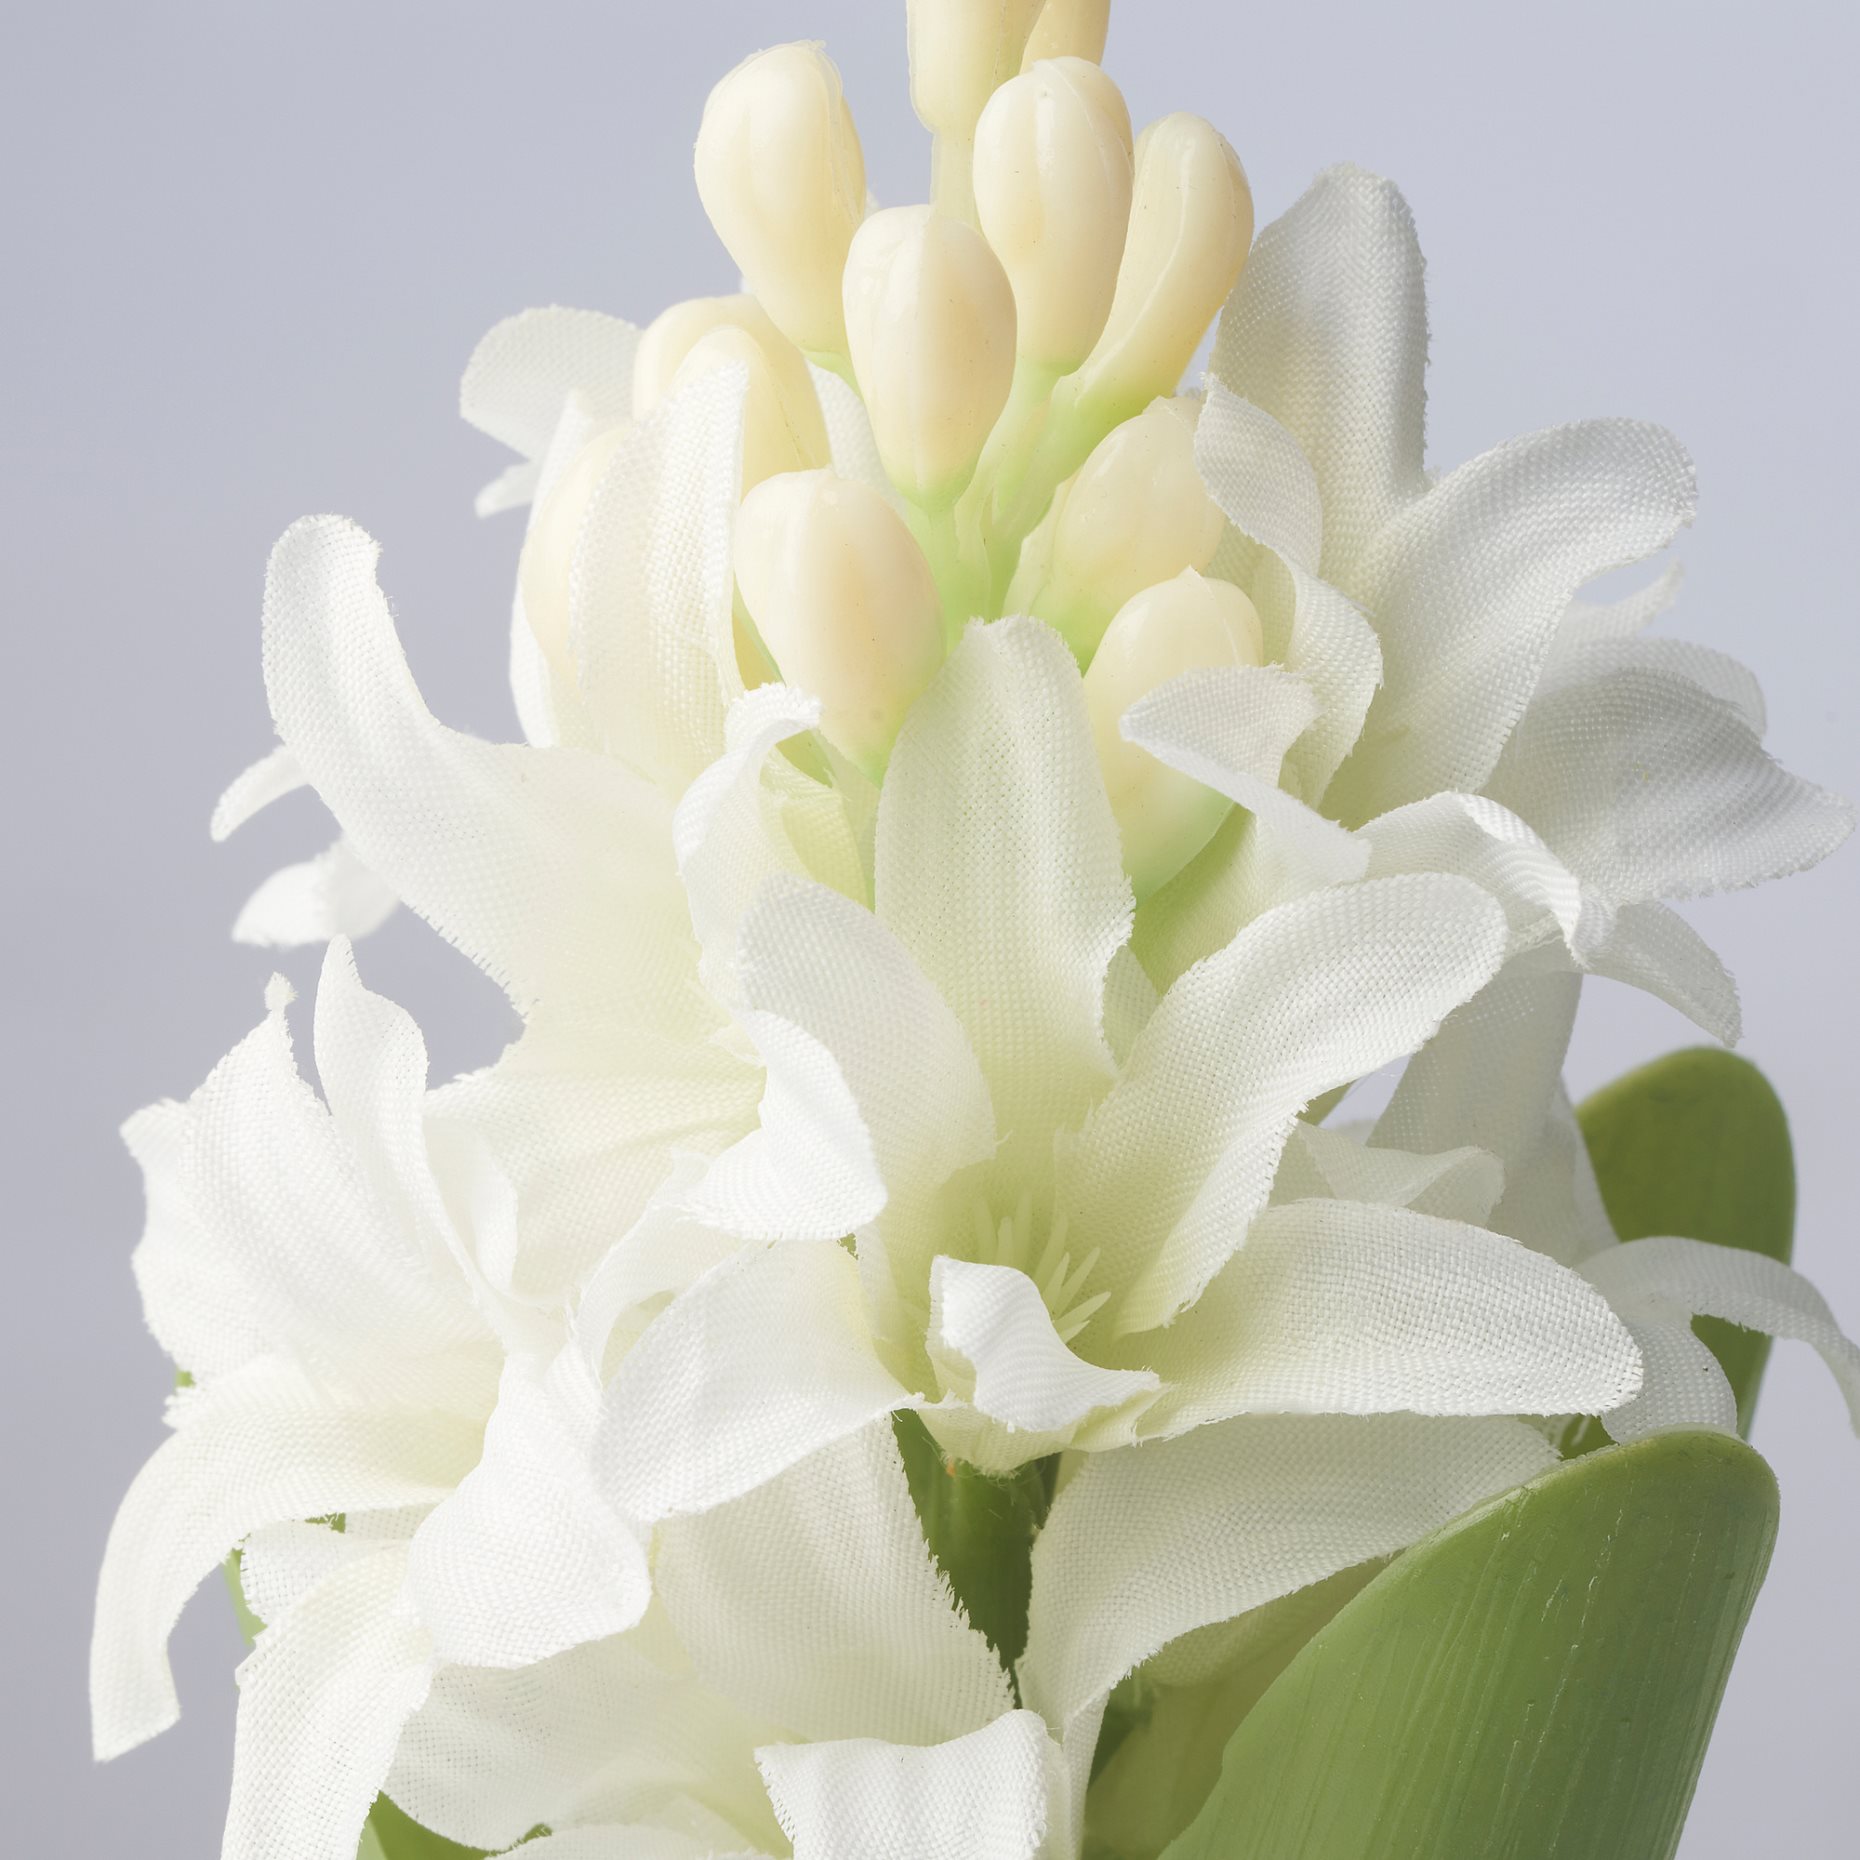 VINTERFINT, τεχνητό λουλούδι/Υάκινθος, 22 cm, 905.637.07